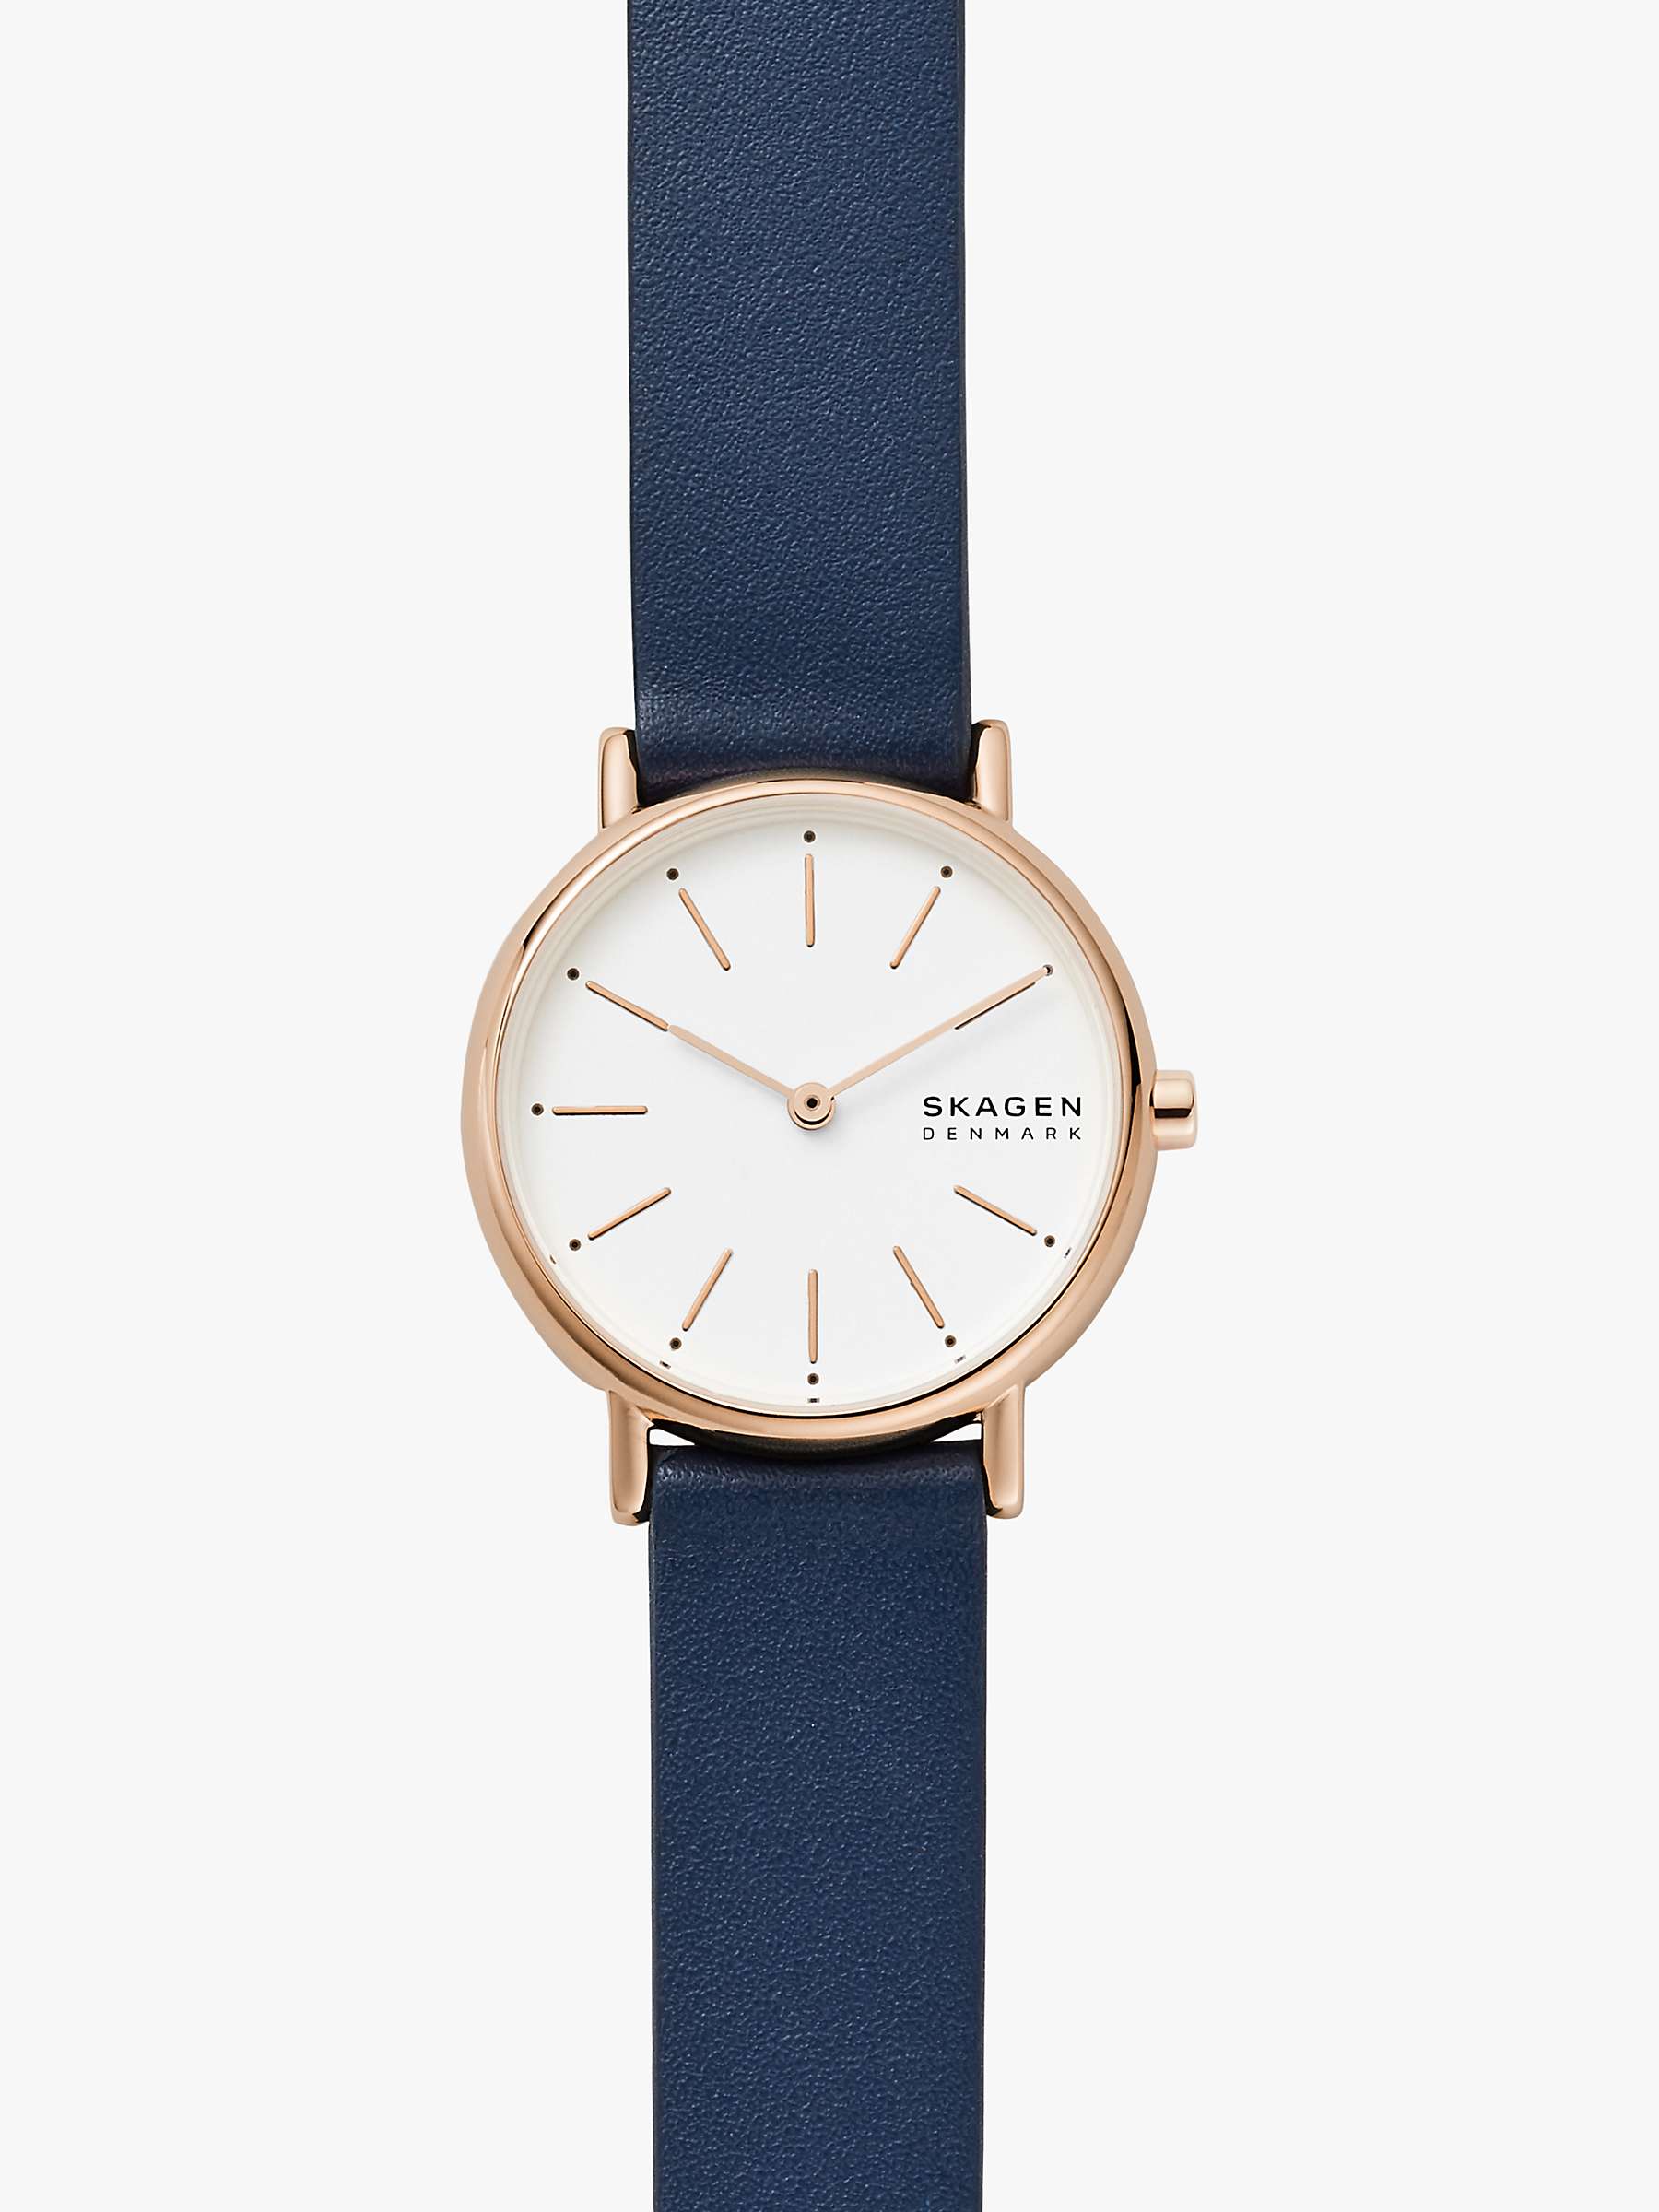 Buy Skagen Women's Signatur Leather Strap Watch, Blue/Rose Gold Online at johnlewis.com